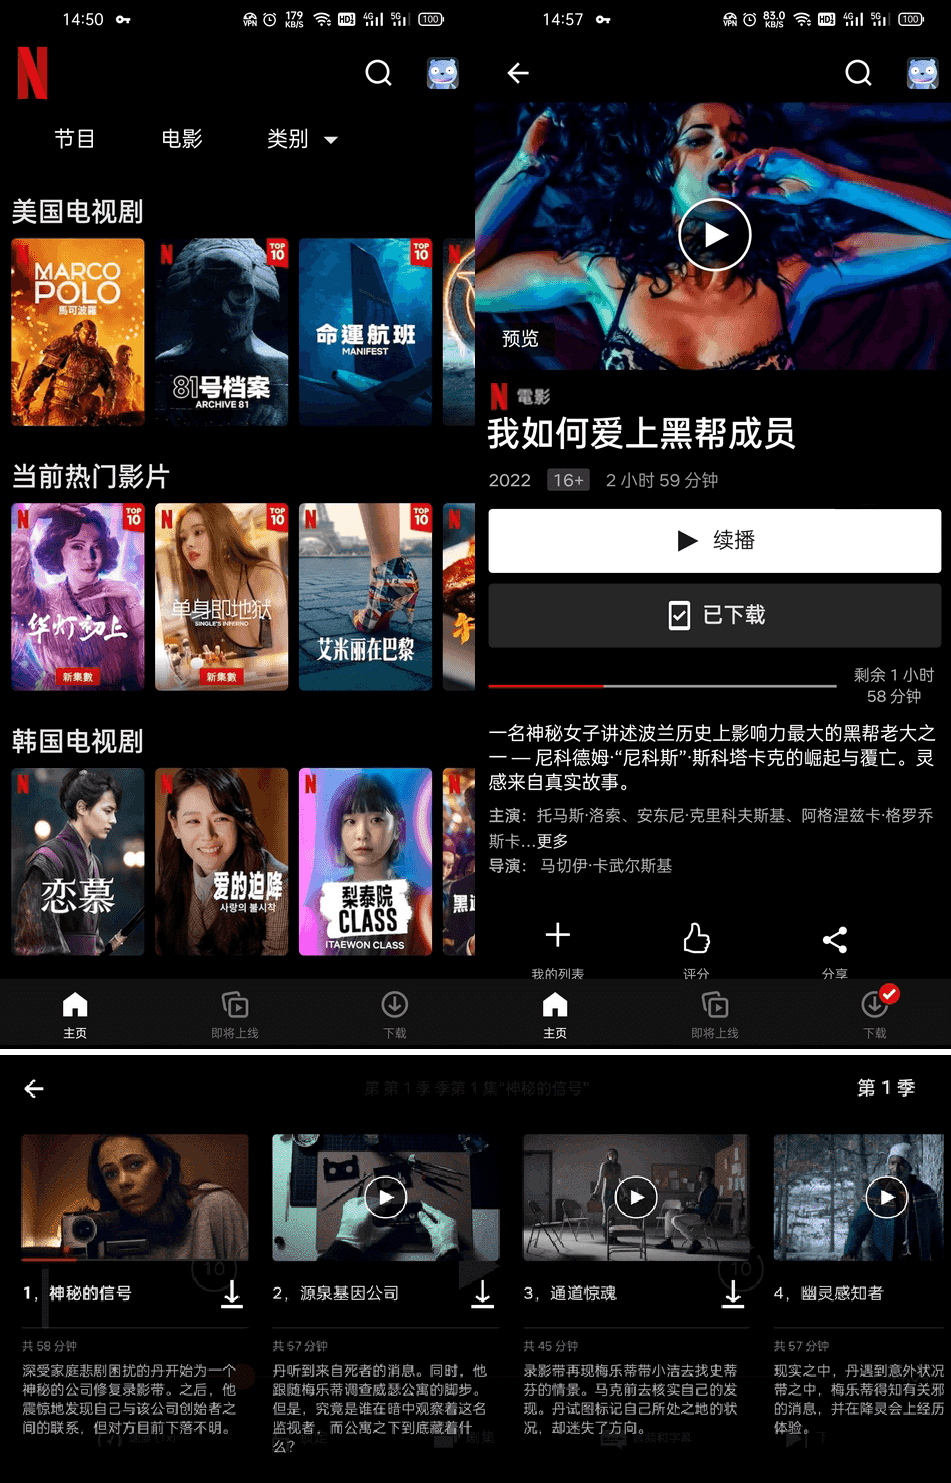 奈飞 Netflix v8.53.2 Build 8 50340 官方正式版